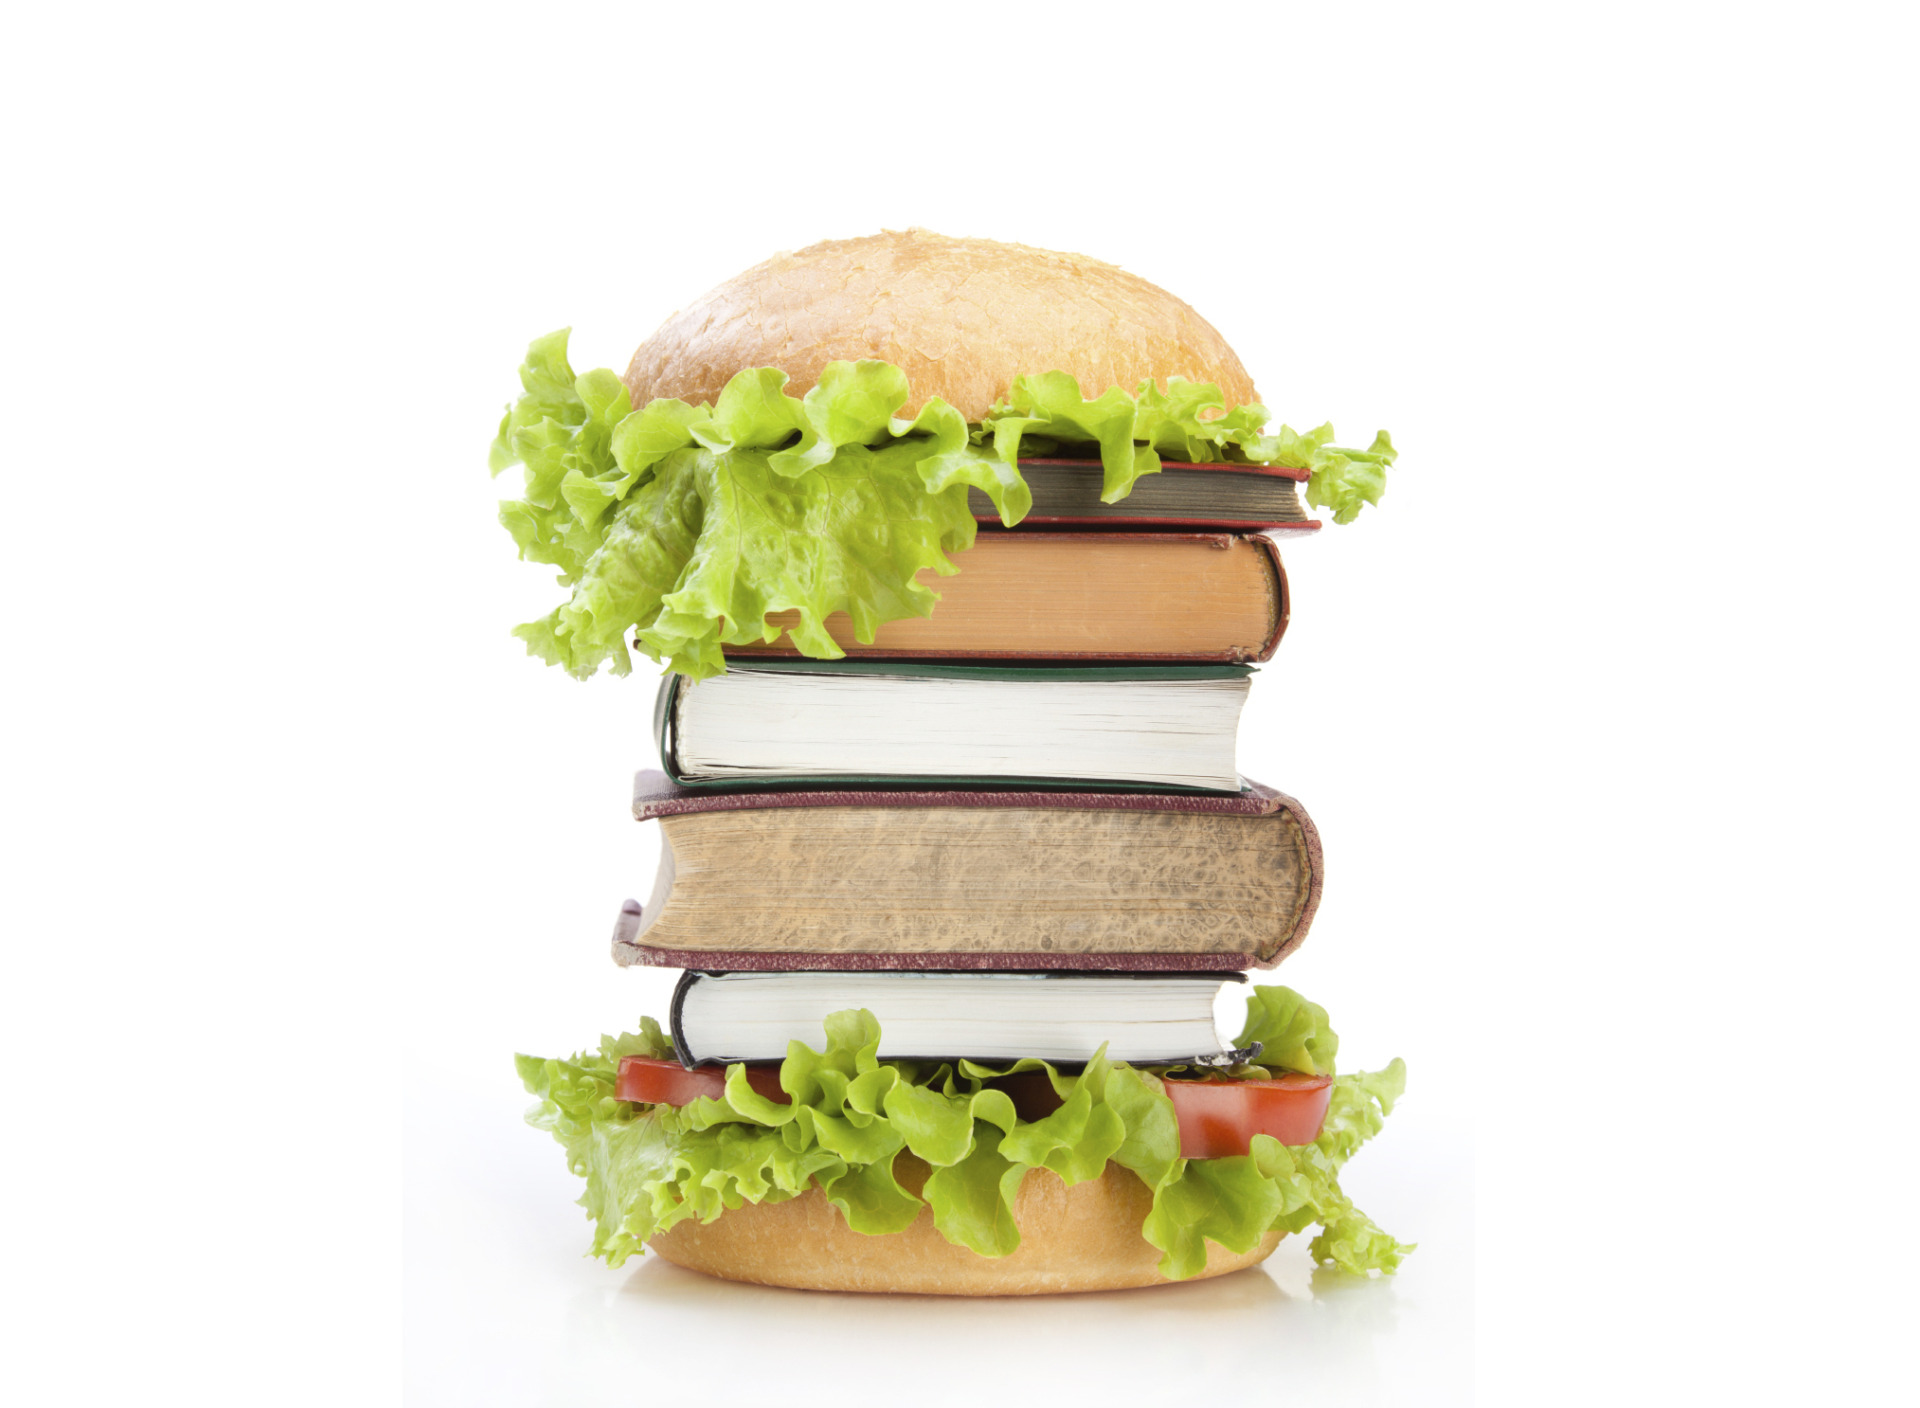 Дело не еде книга. Бургер из книг. Бутерброд. Фон для презентации бутерброды. Книги о еде.